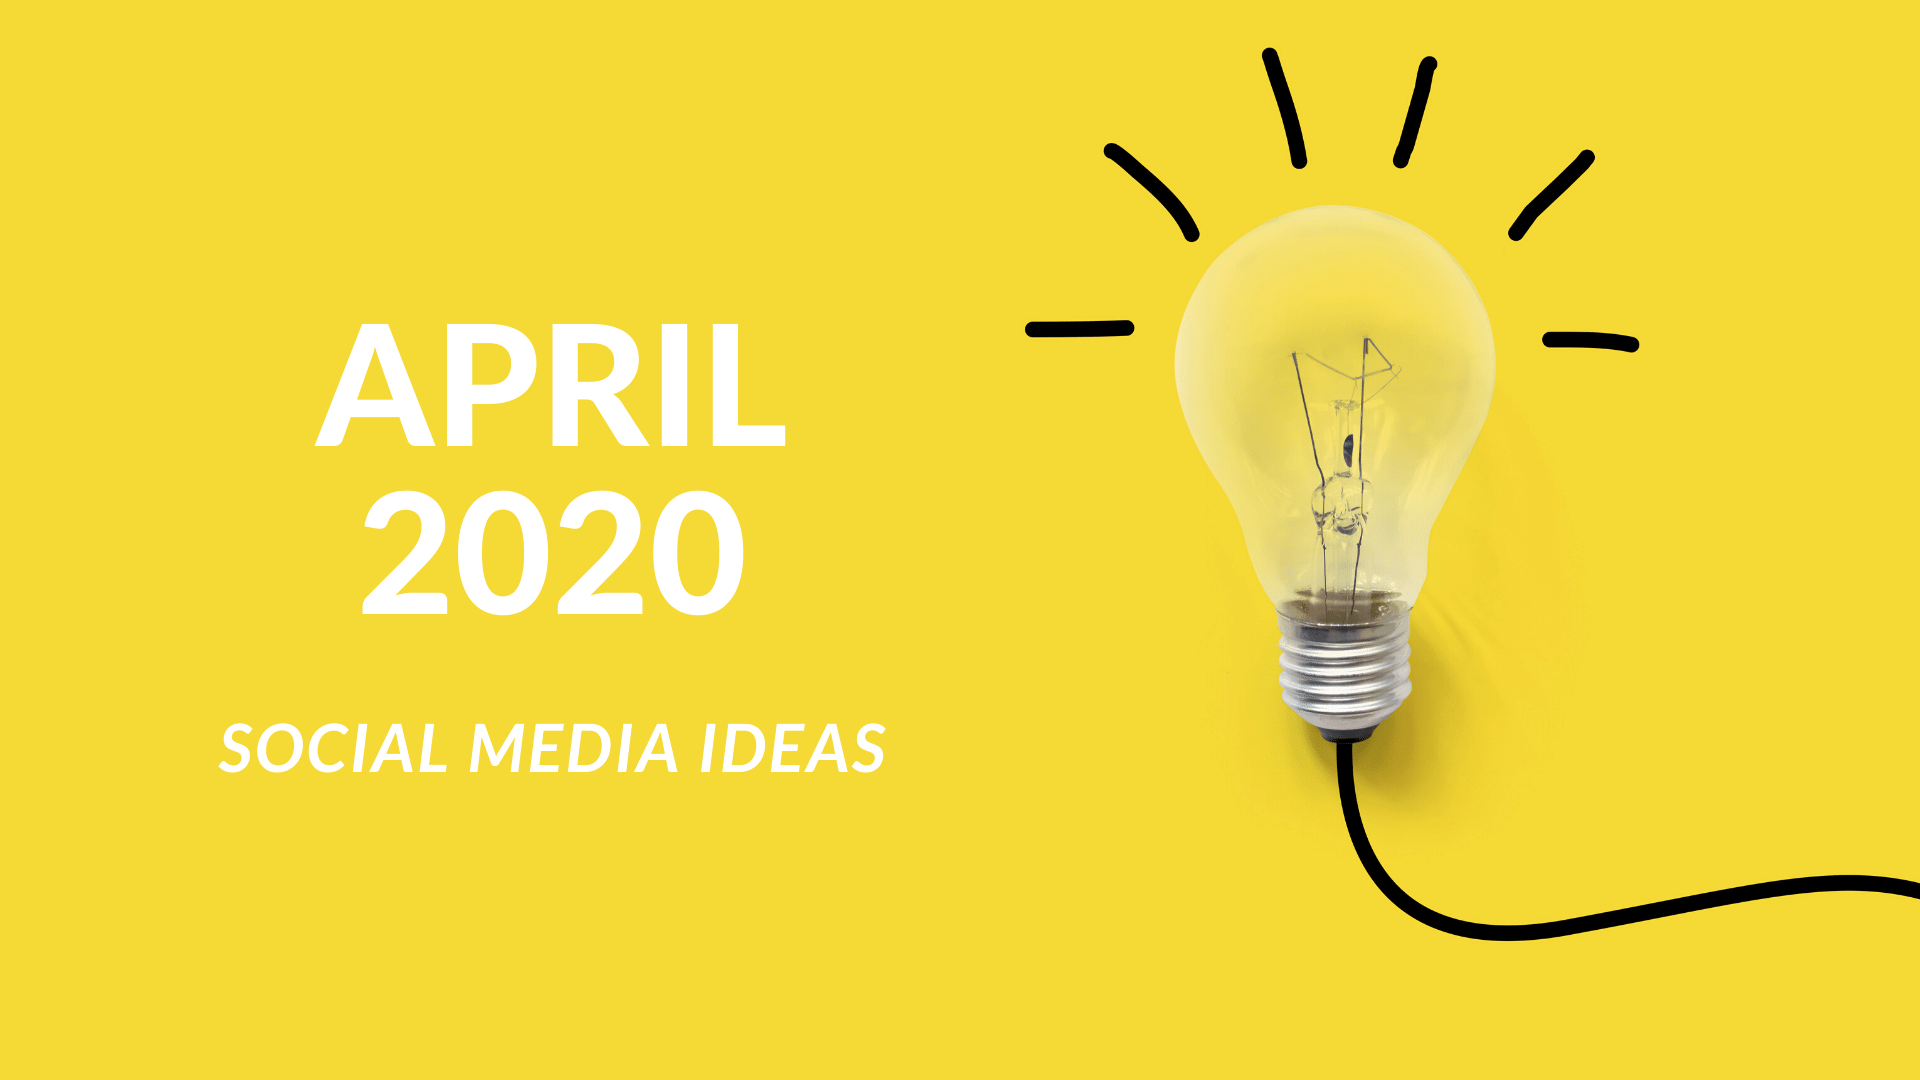 Social media ideas for April 2020